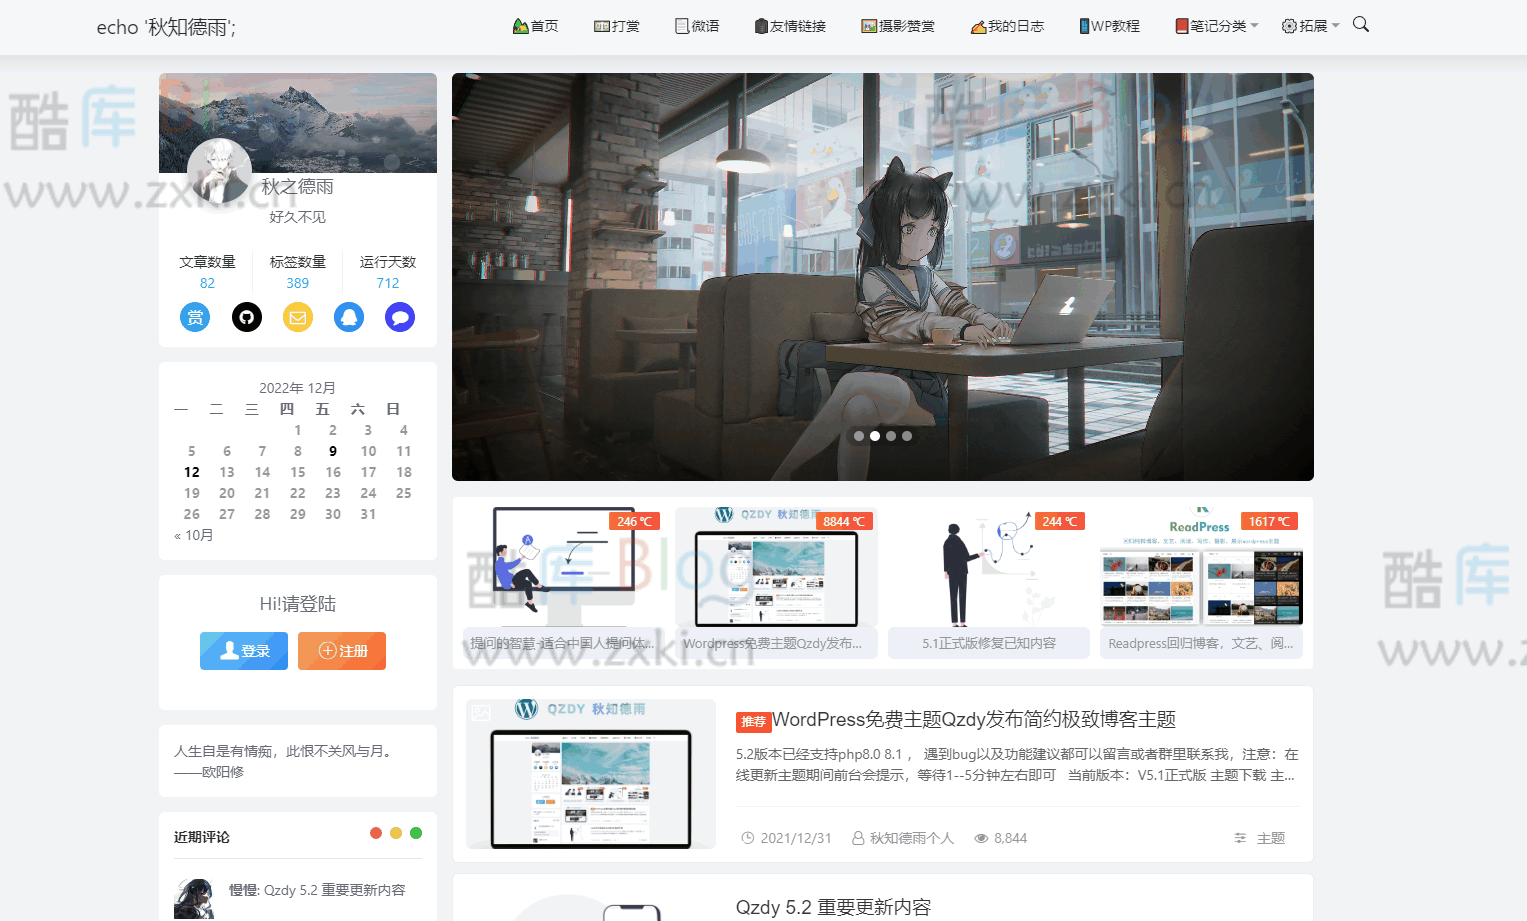 WordPress简约博客主题Qzdy(秋知德雨)更新发布5.1版本 第2张插图